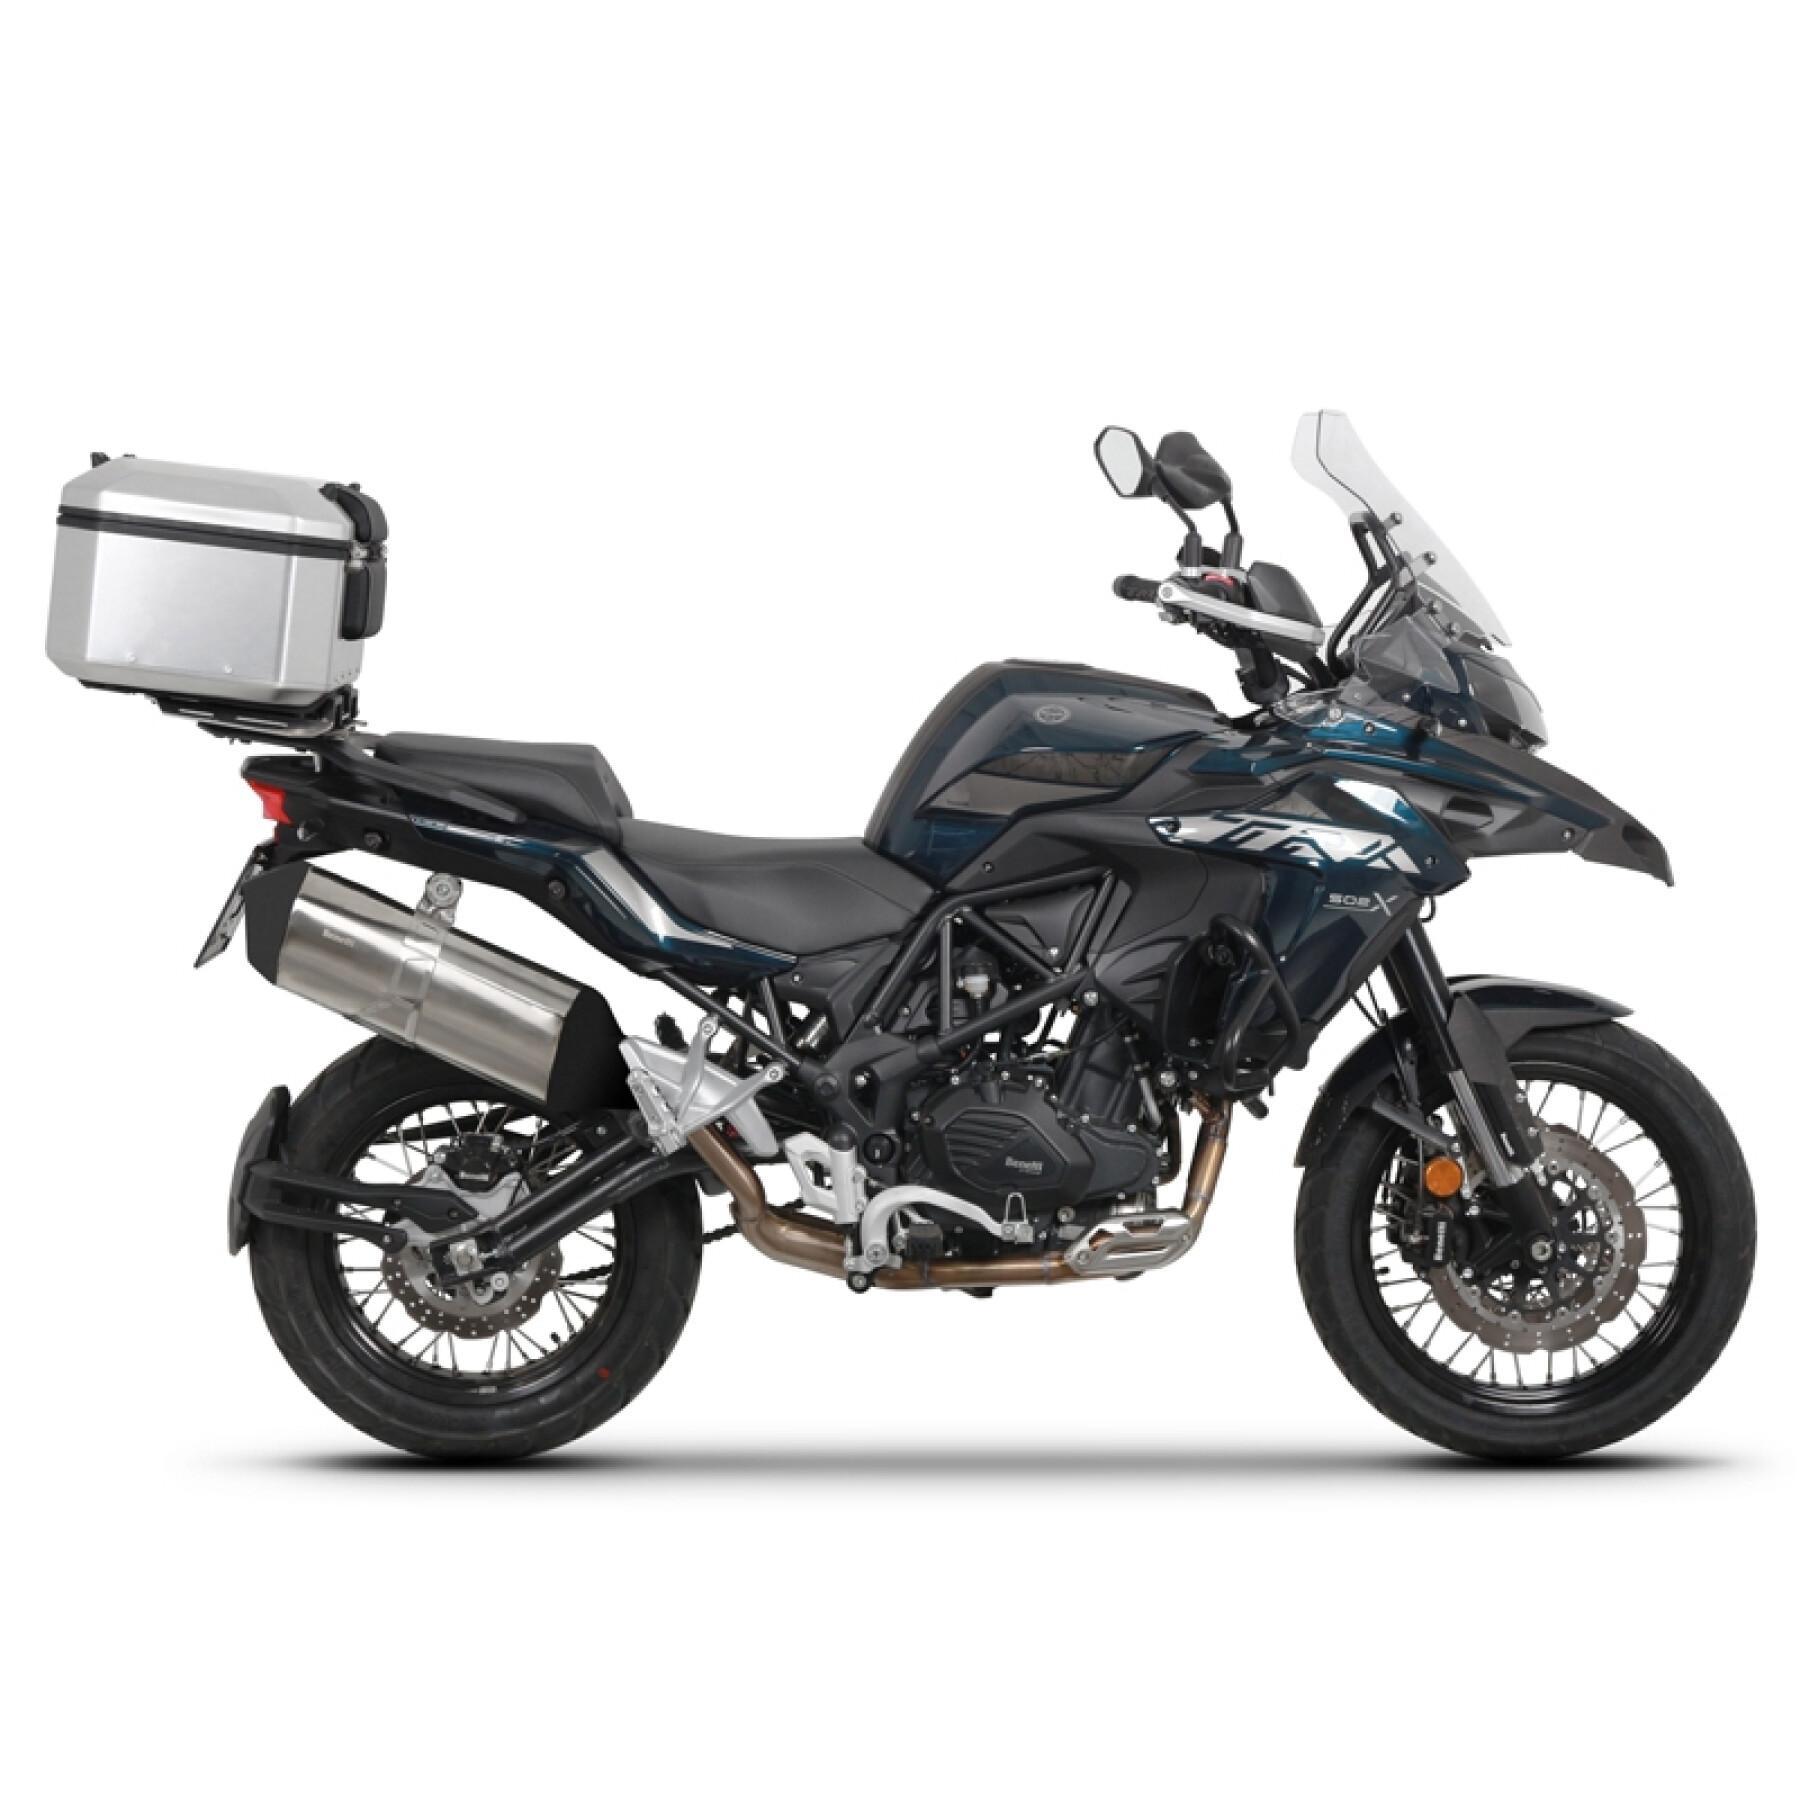 Suporte de top case para motos Shad Benelli TRK 502X 2020-2021